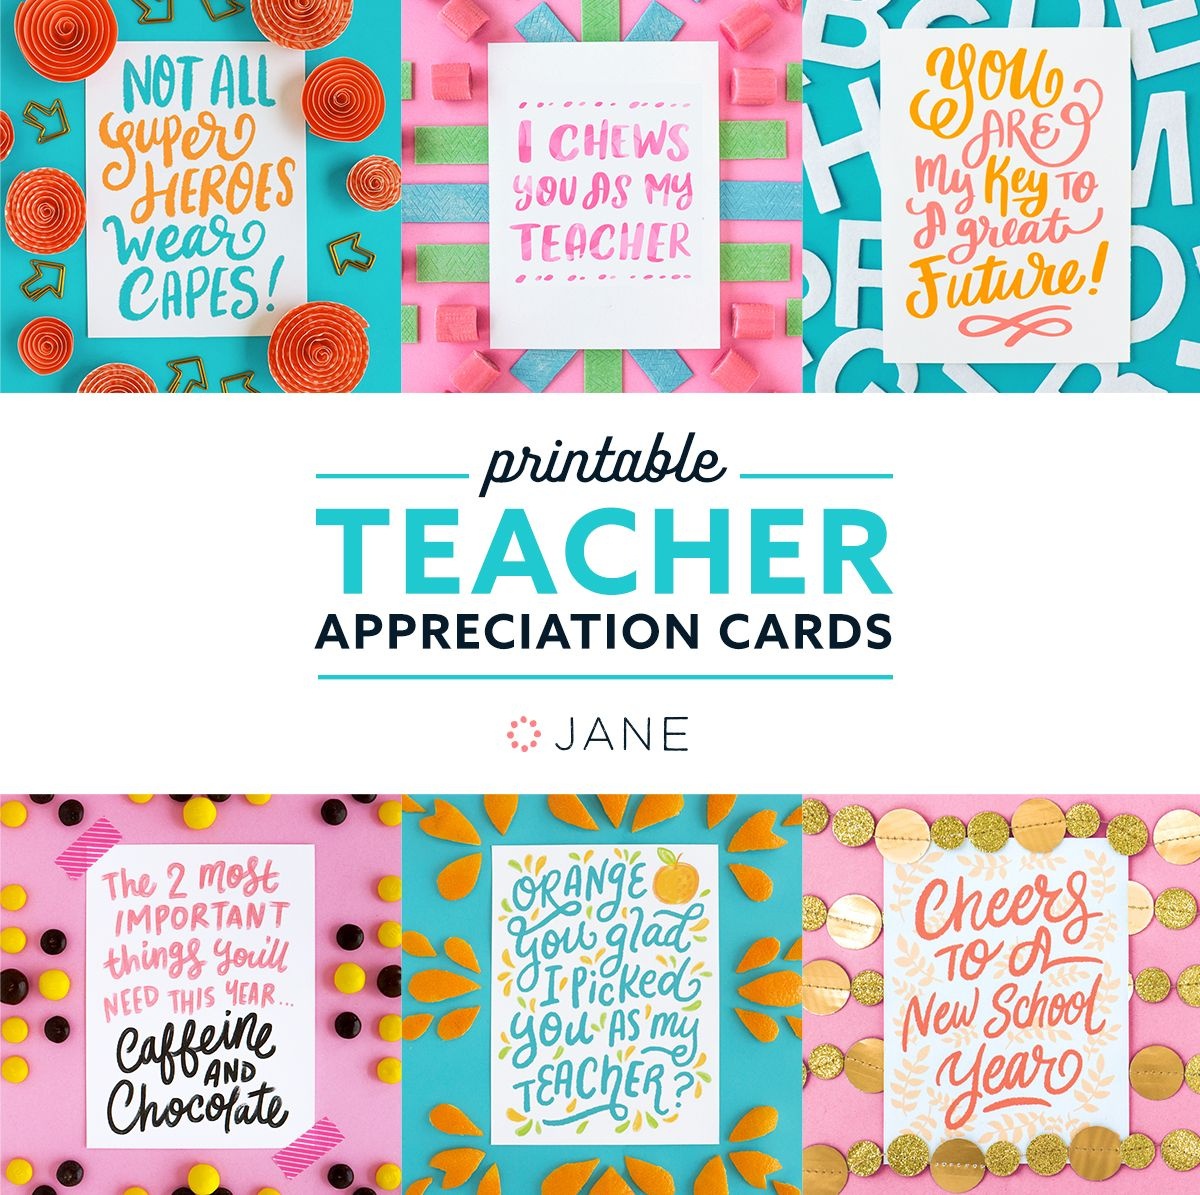 Jane Free Teacher Appreciation Printable Cards | Teacher - Free Printable Teacher Appreciation Greeting Cards